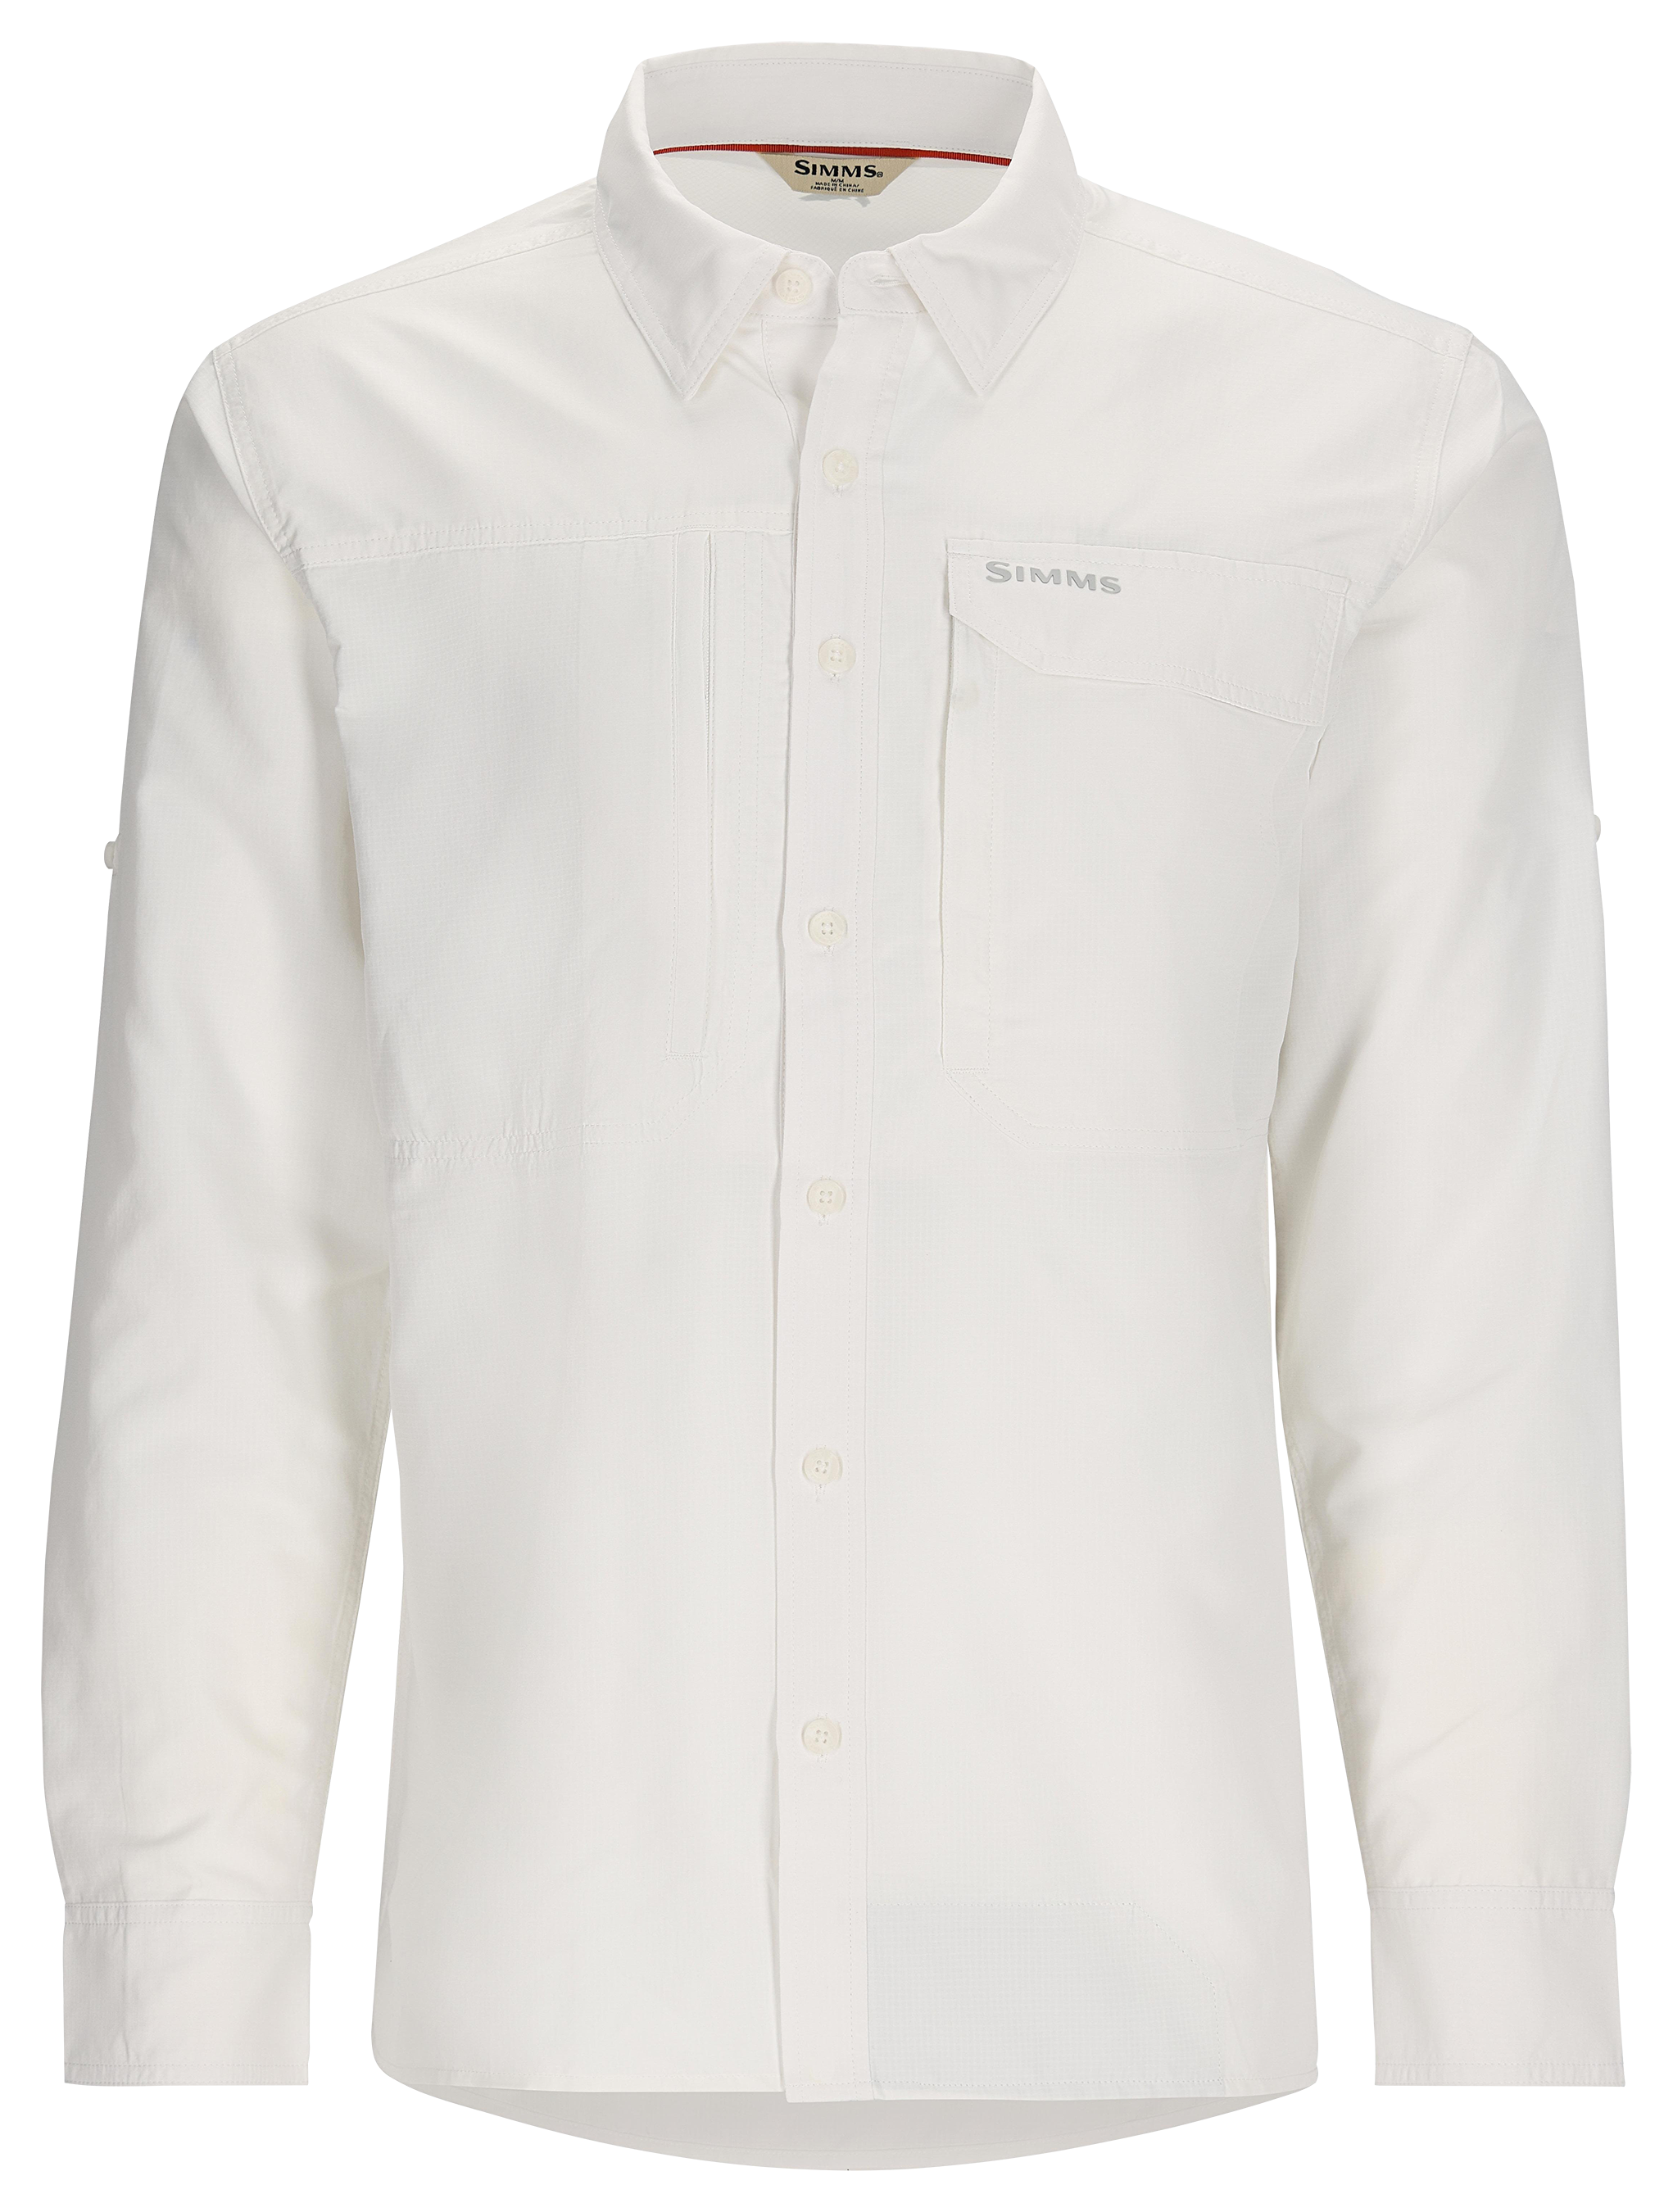 Simms Guide Logo Long-Sleeve Shirt for Men